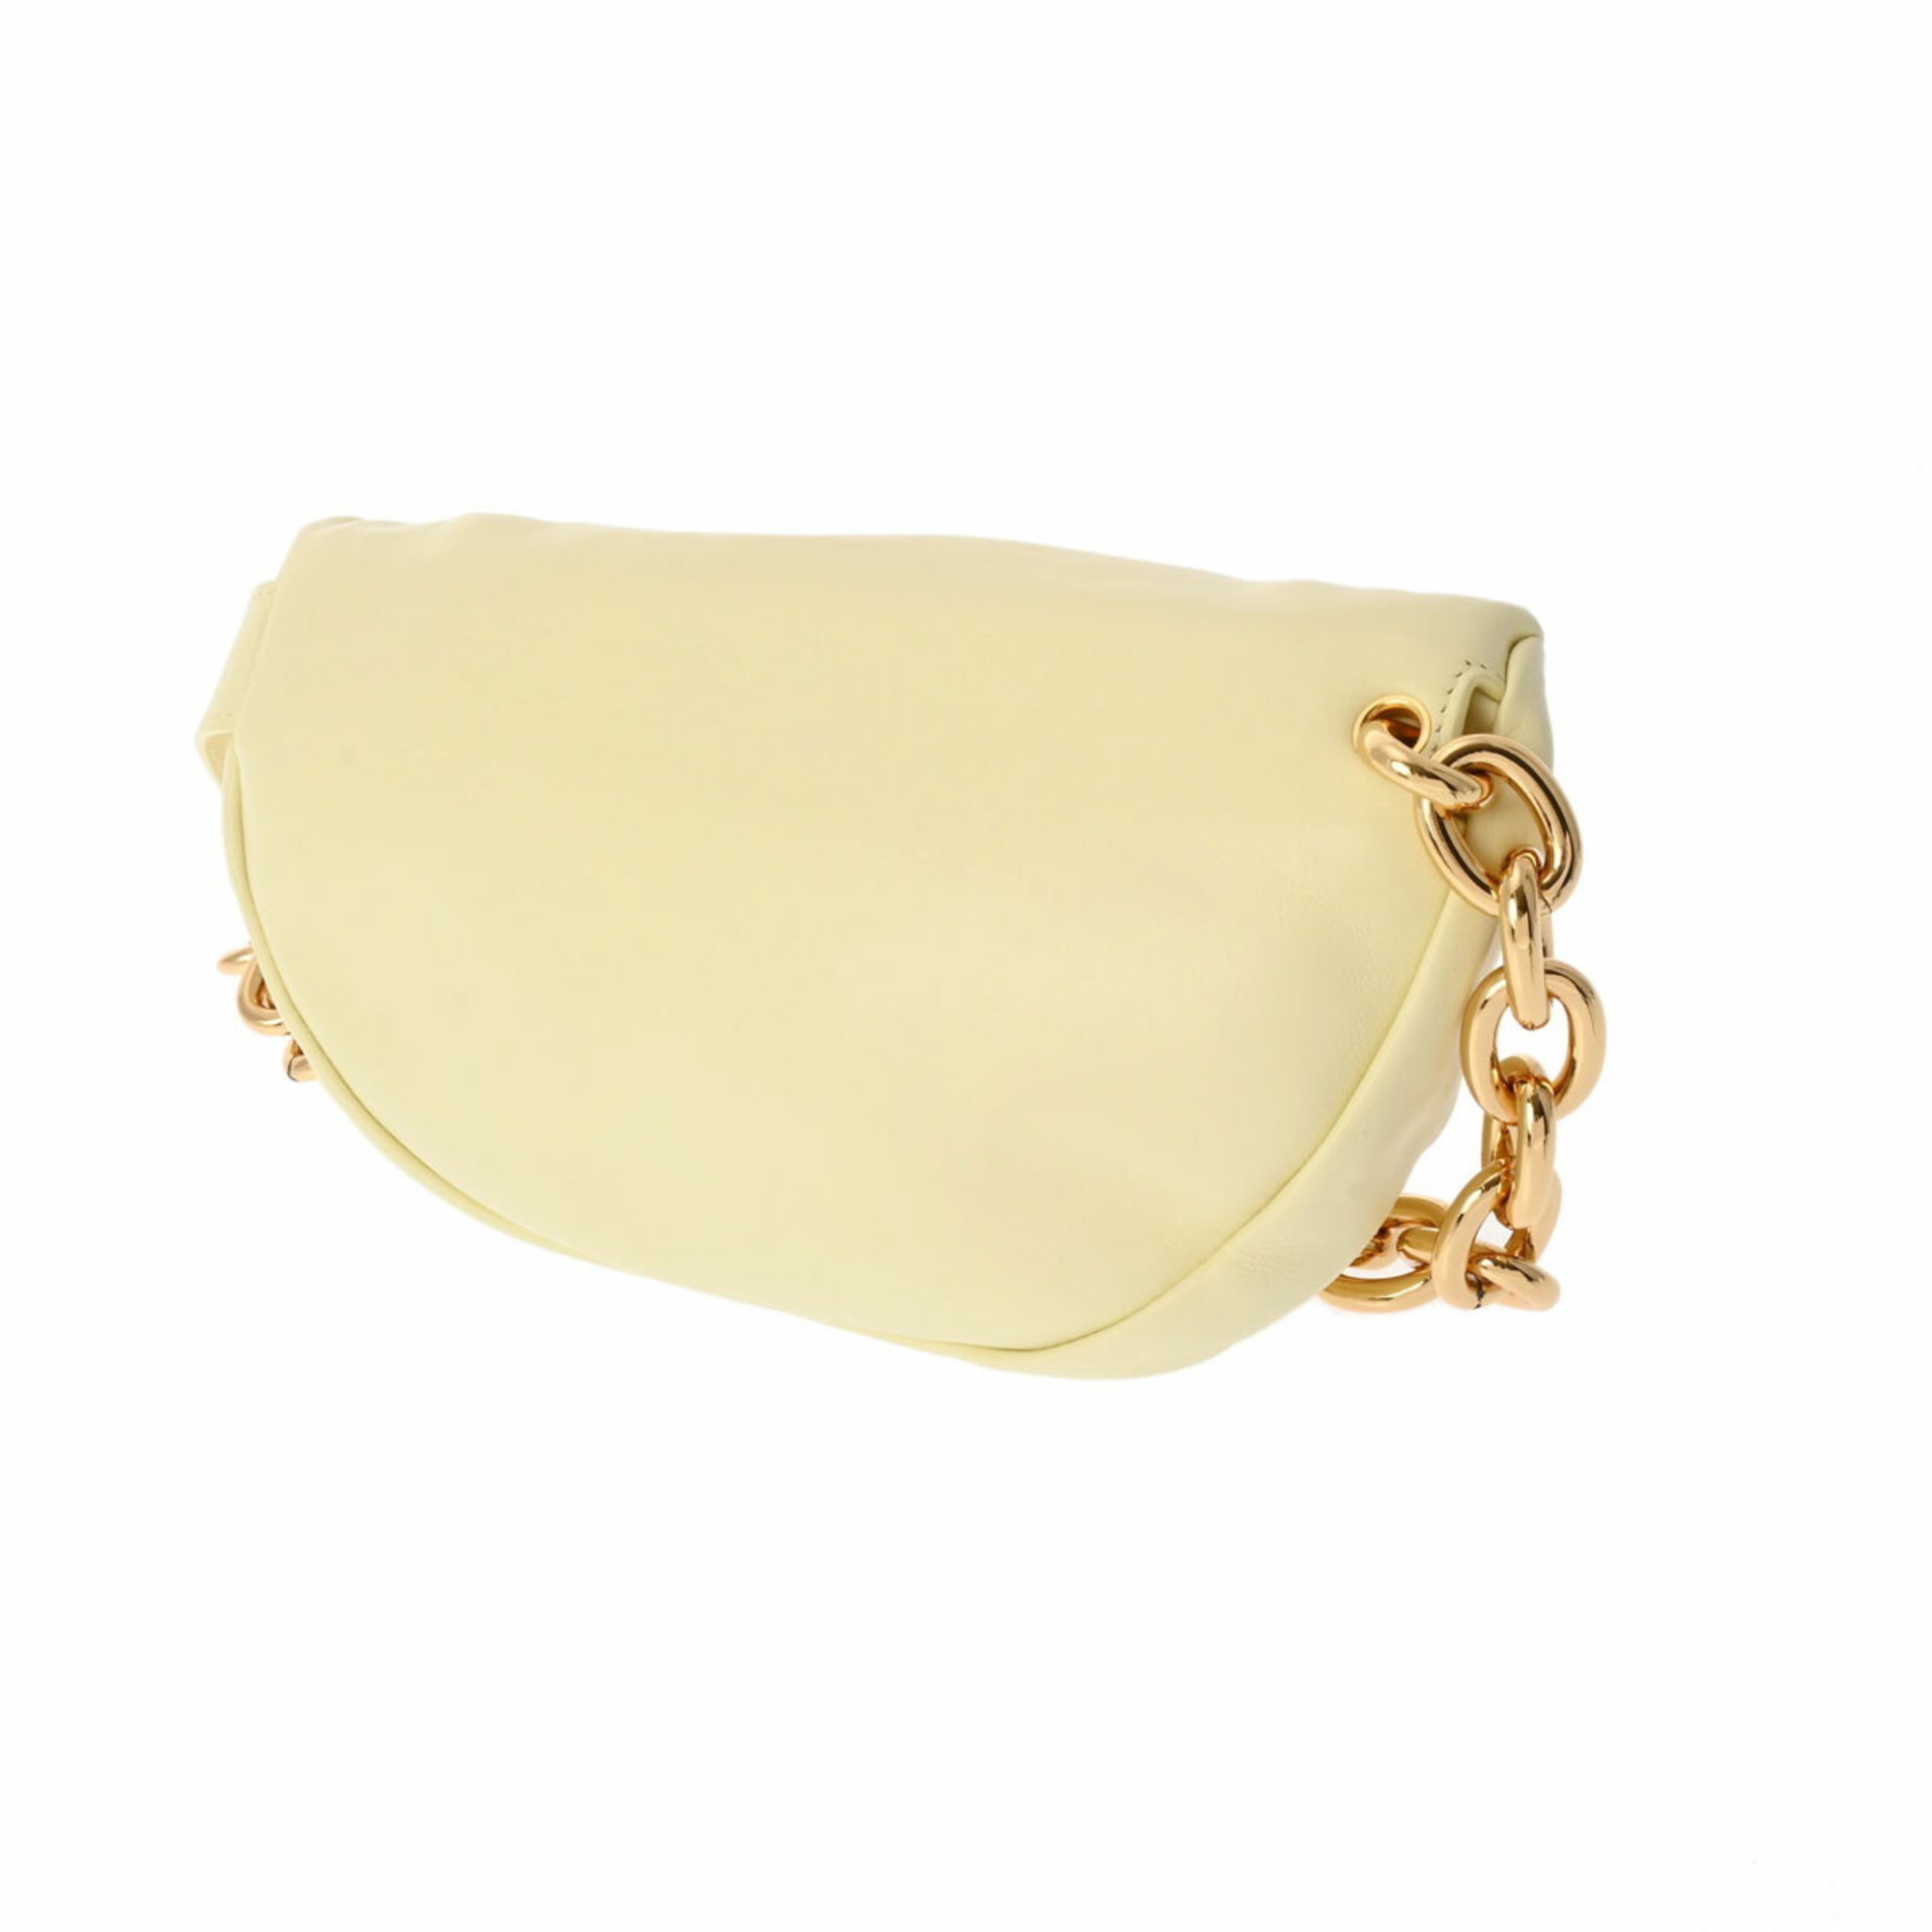 BOTTEGAVENETA Bottega Veneta The Chain Pouch Cream 651445 Women's Leather Shoulder Bag